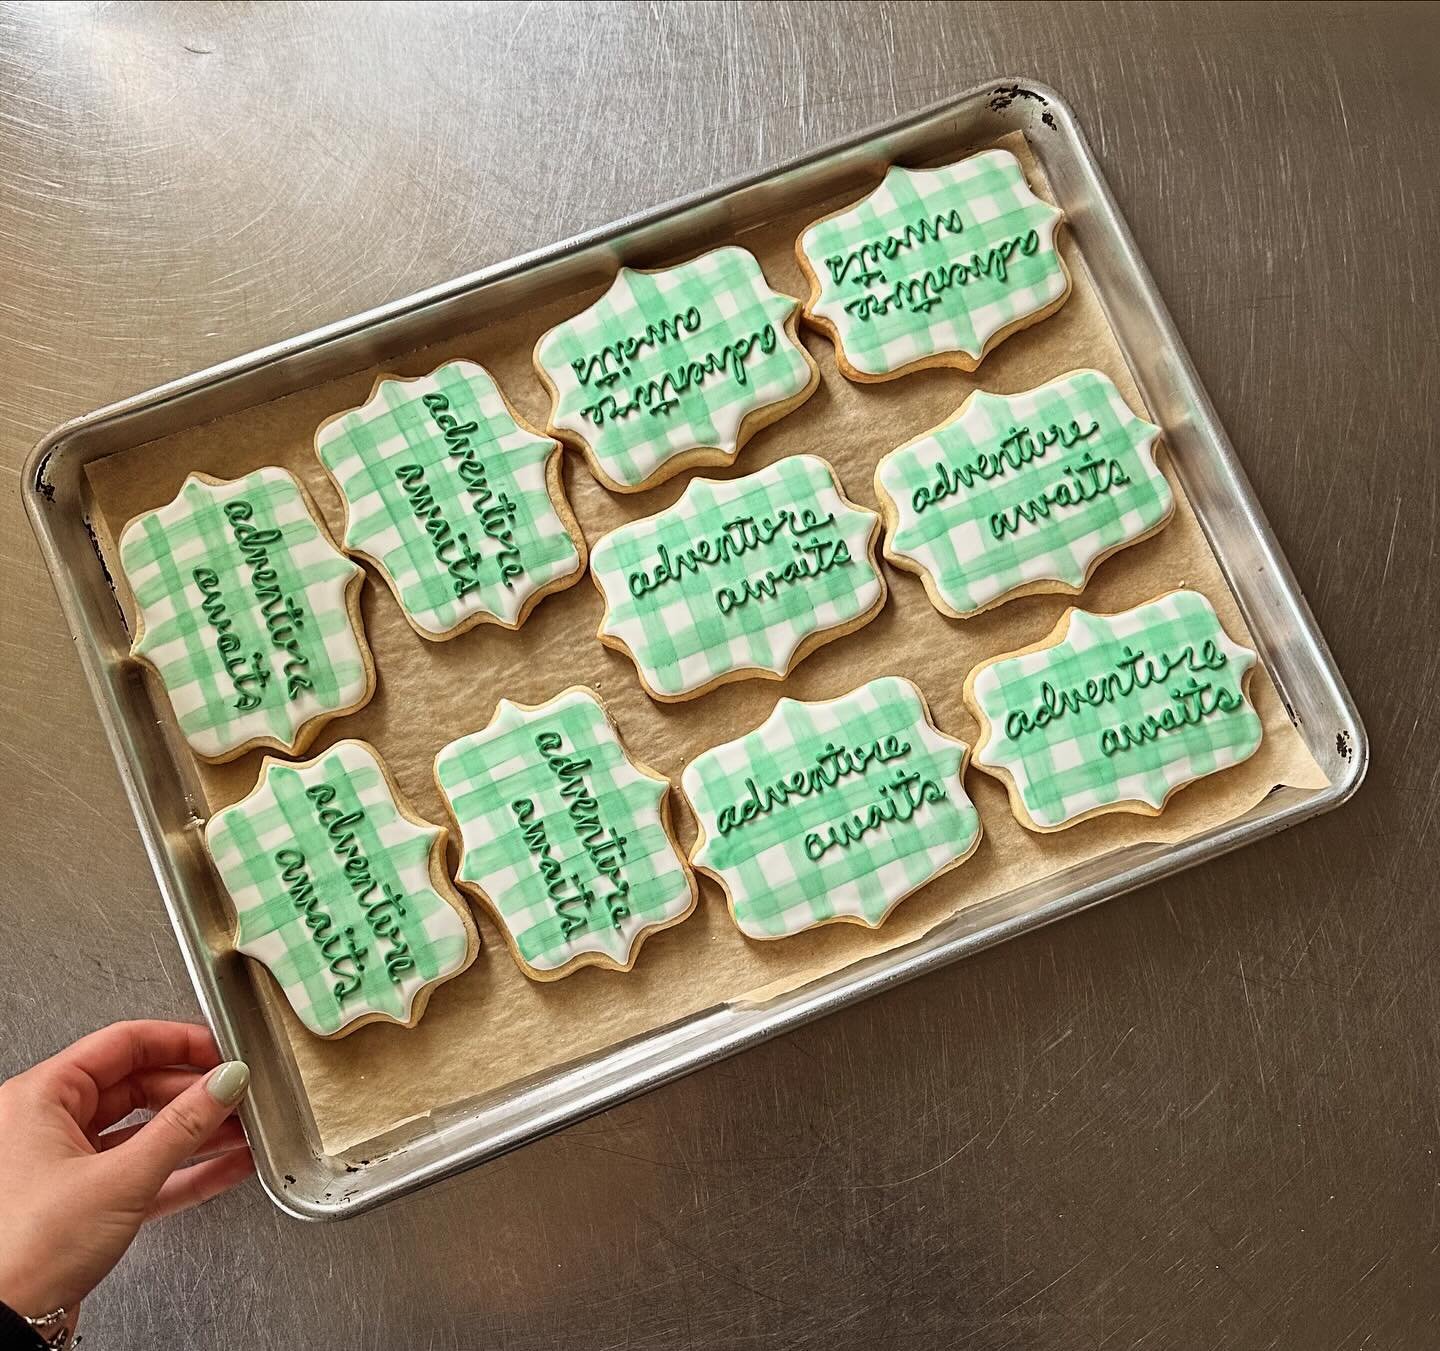 We make amazing custom cookies!!! And they taste great too &hearts;️ #crushcakes #cookies